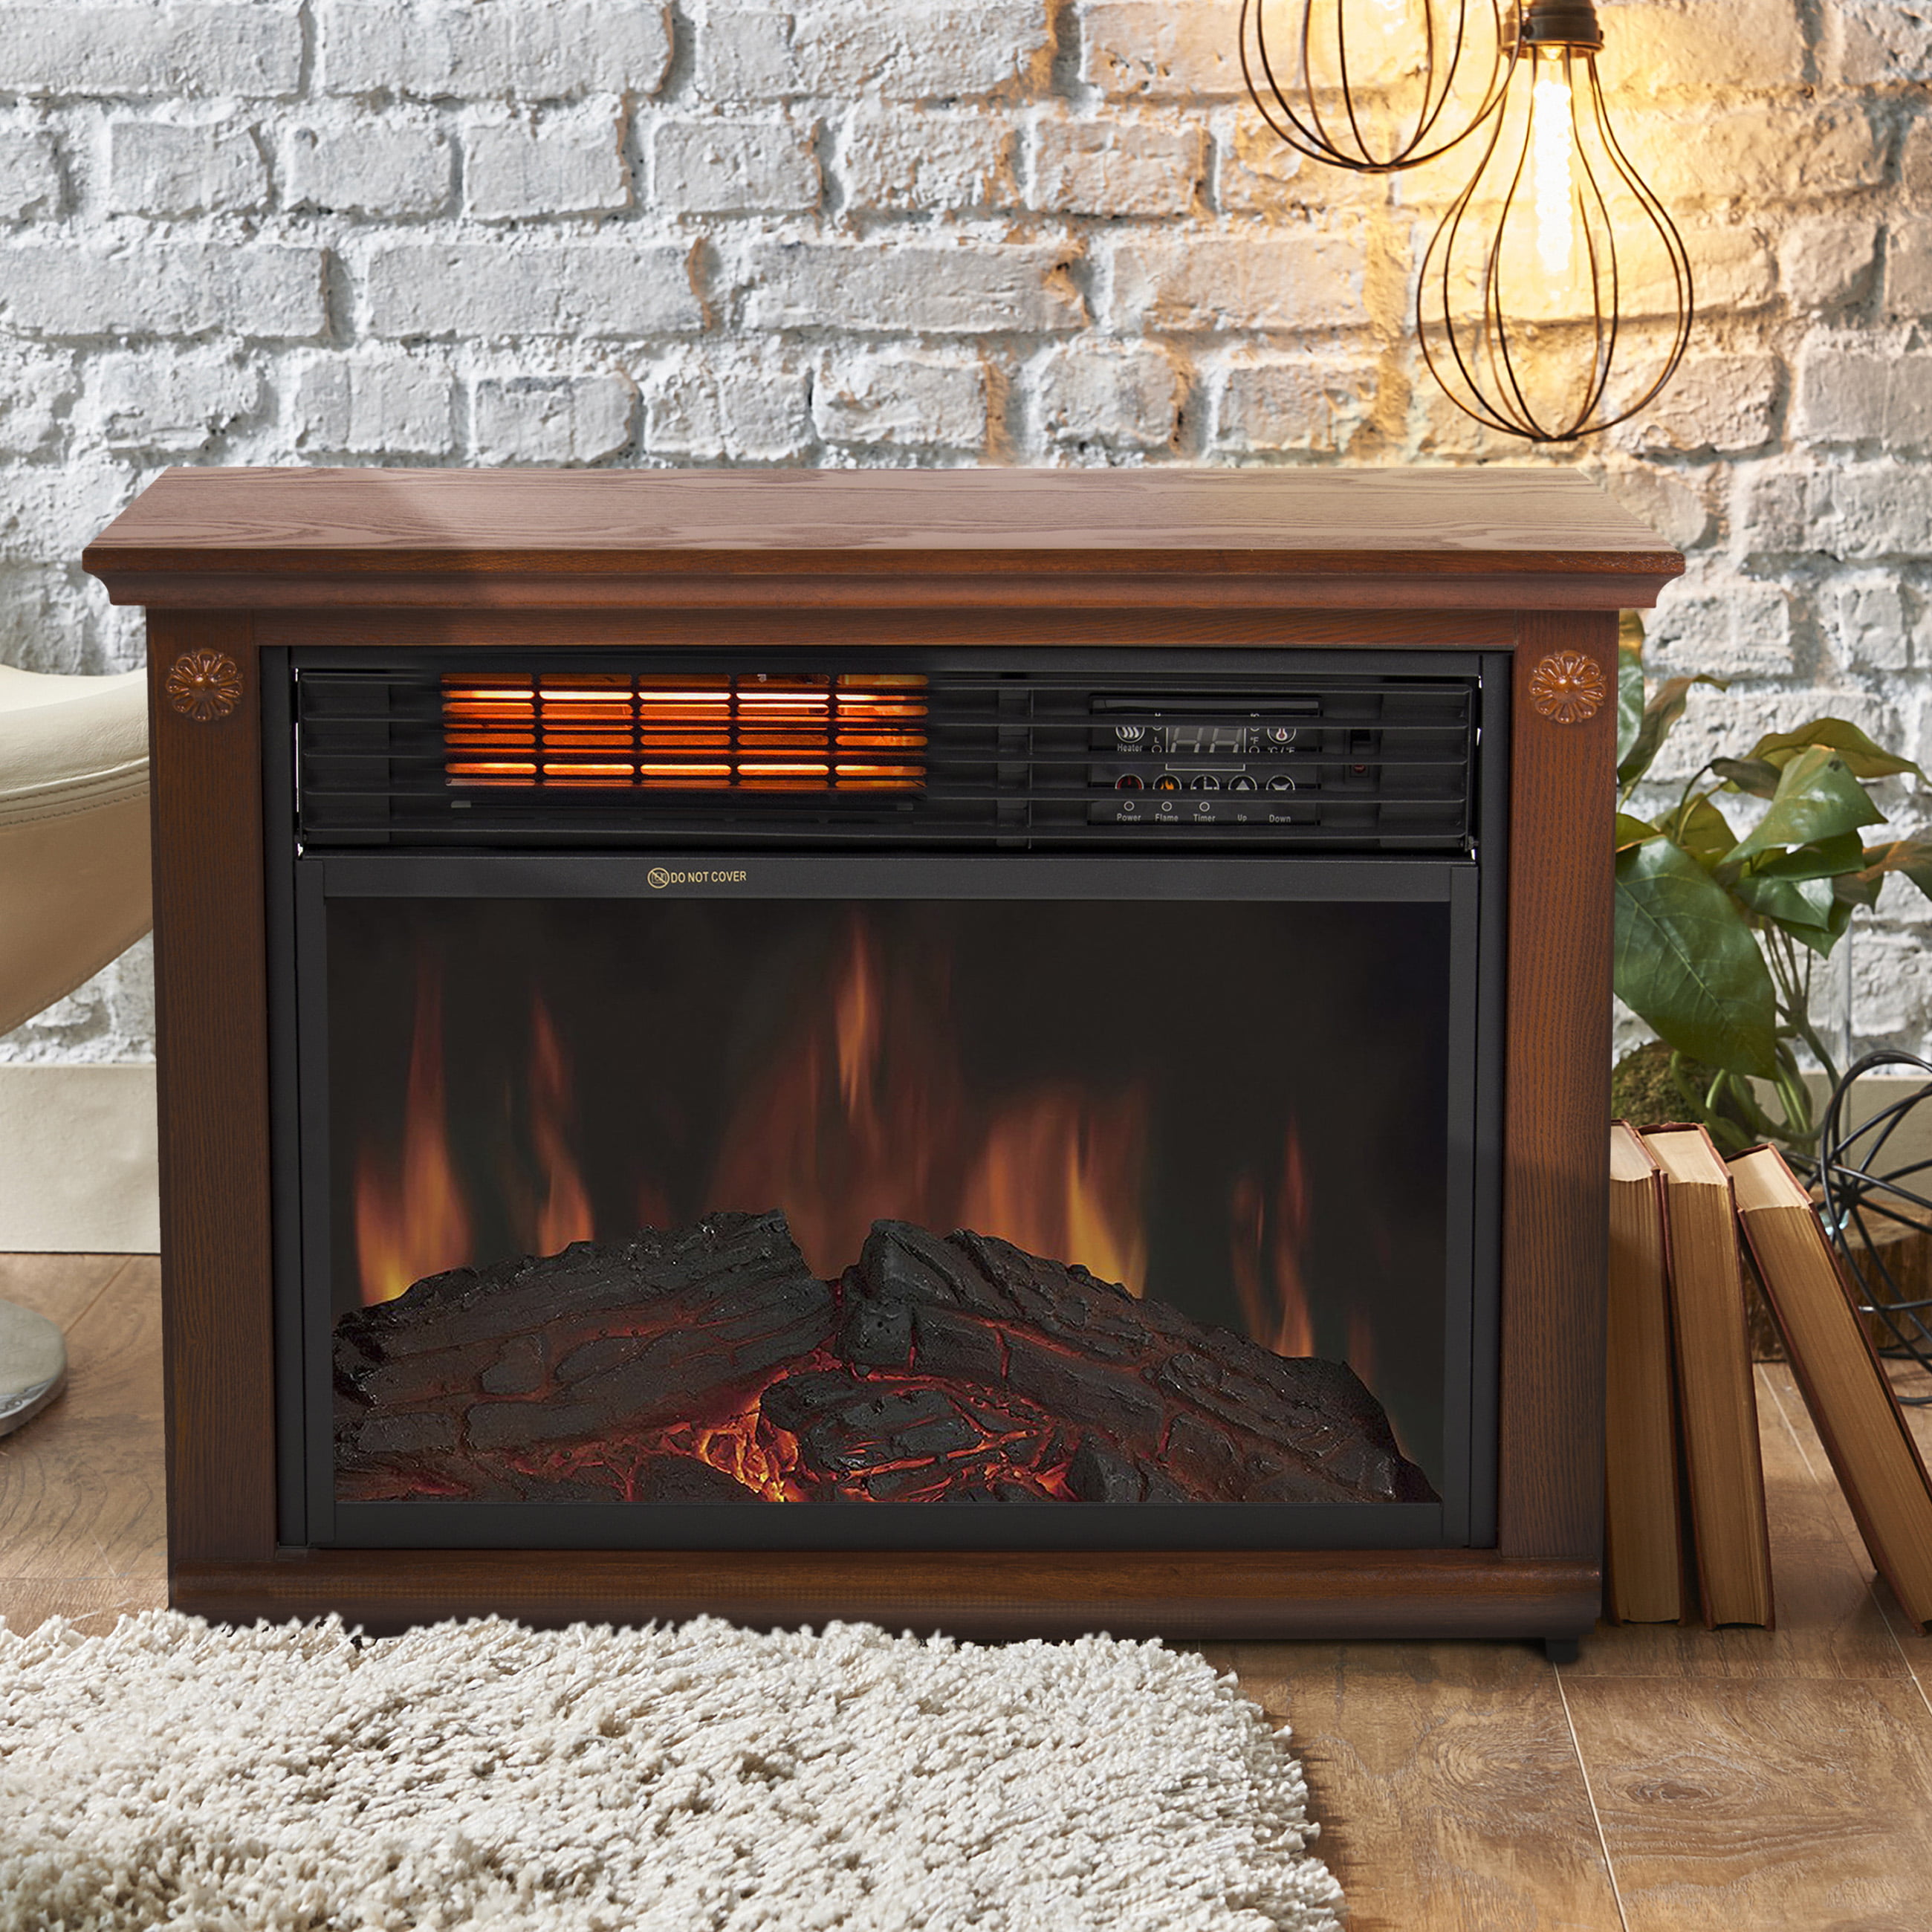 Buy Large Room Infrared Quartz Electric Fireplace Heater Honey Oak Finish w/ Remote at Walmart.com